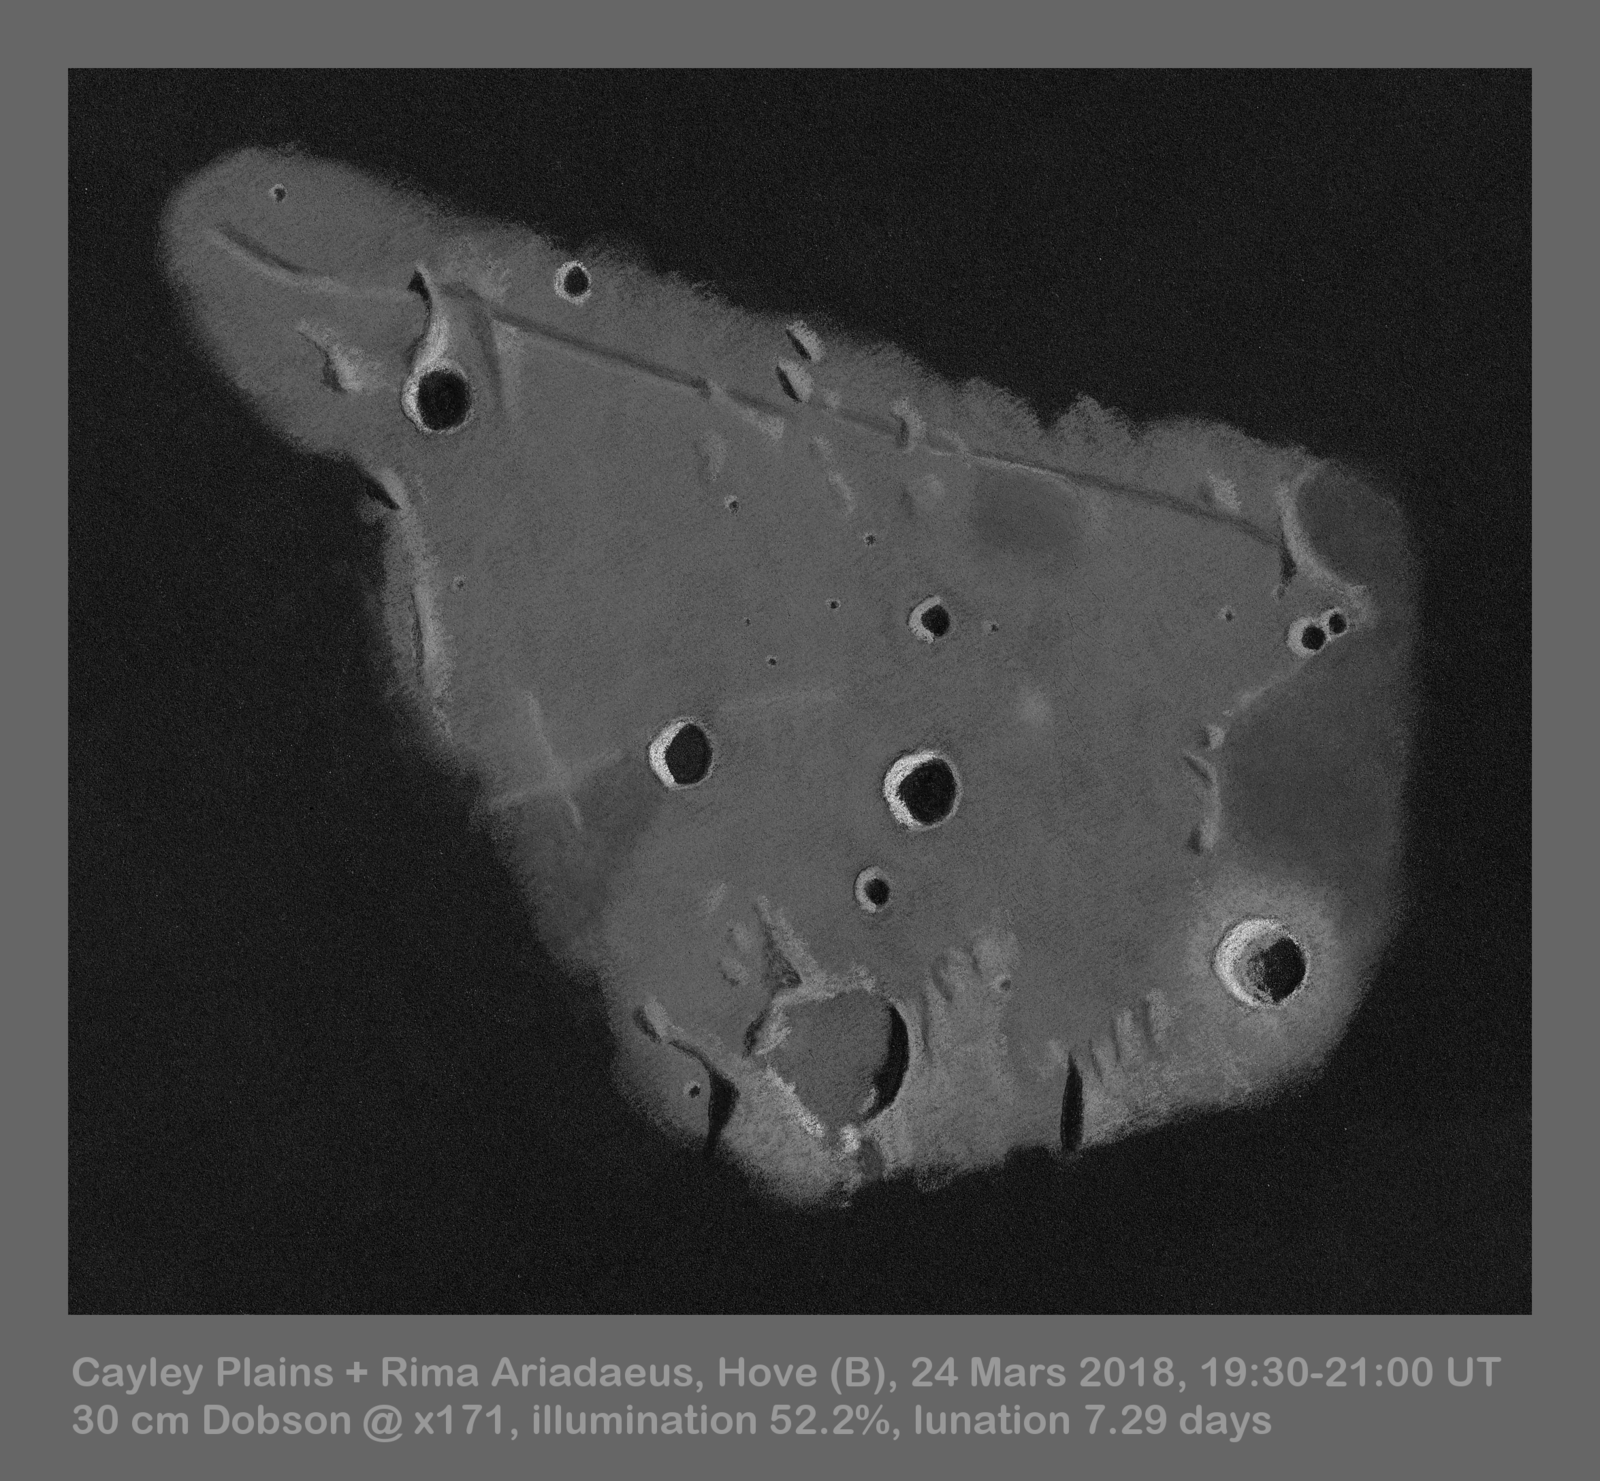 Lunar 050: Cayley Plains (light, smooth plains of uncertain origin)